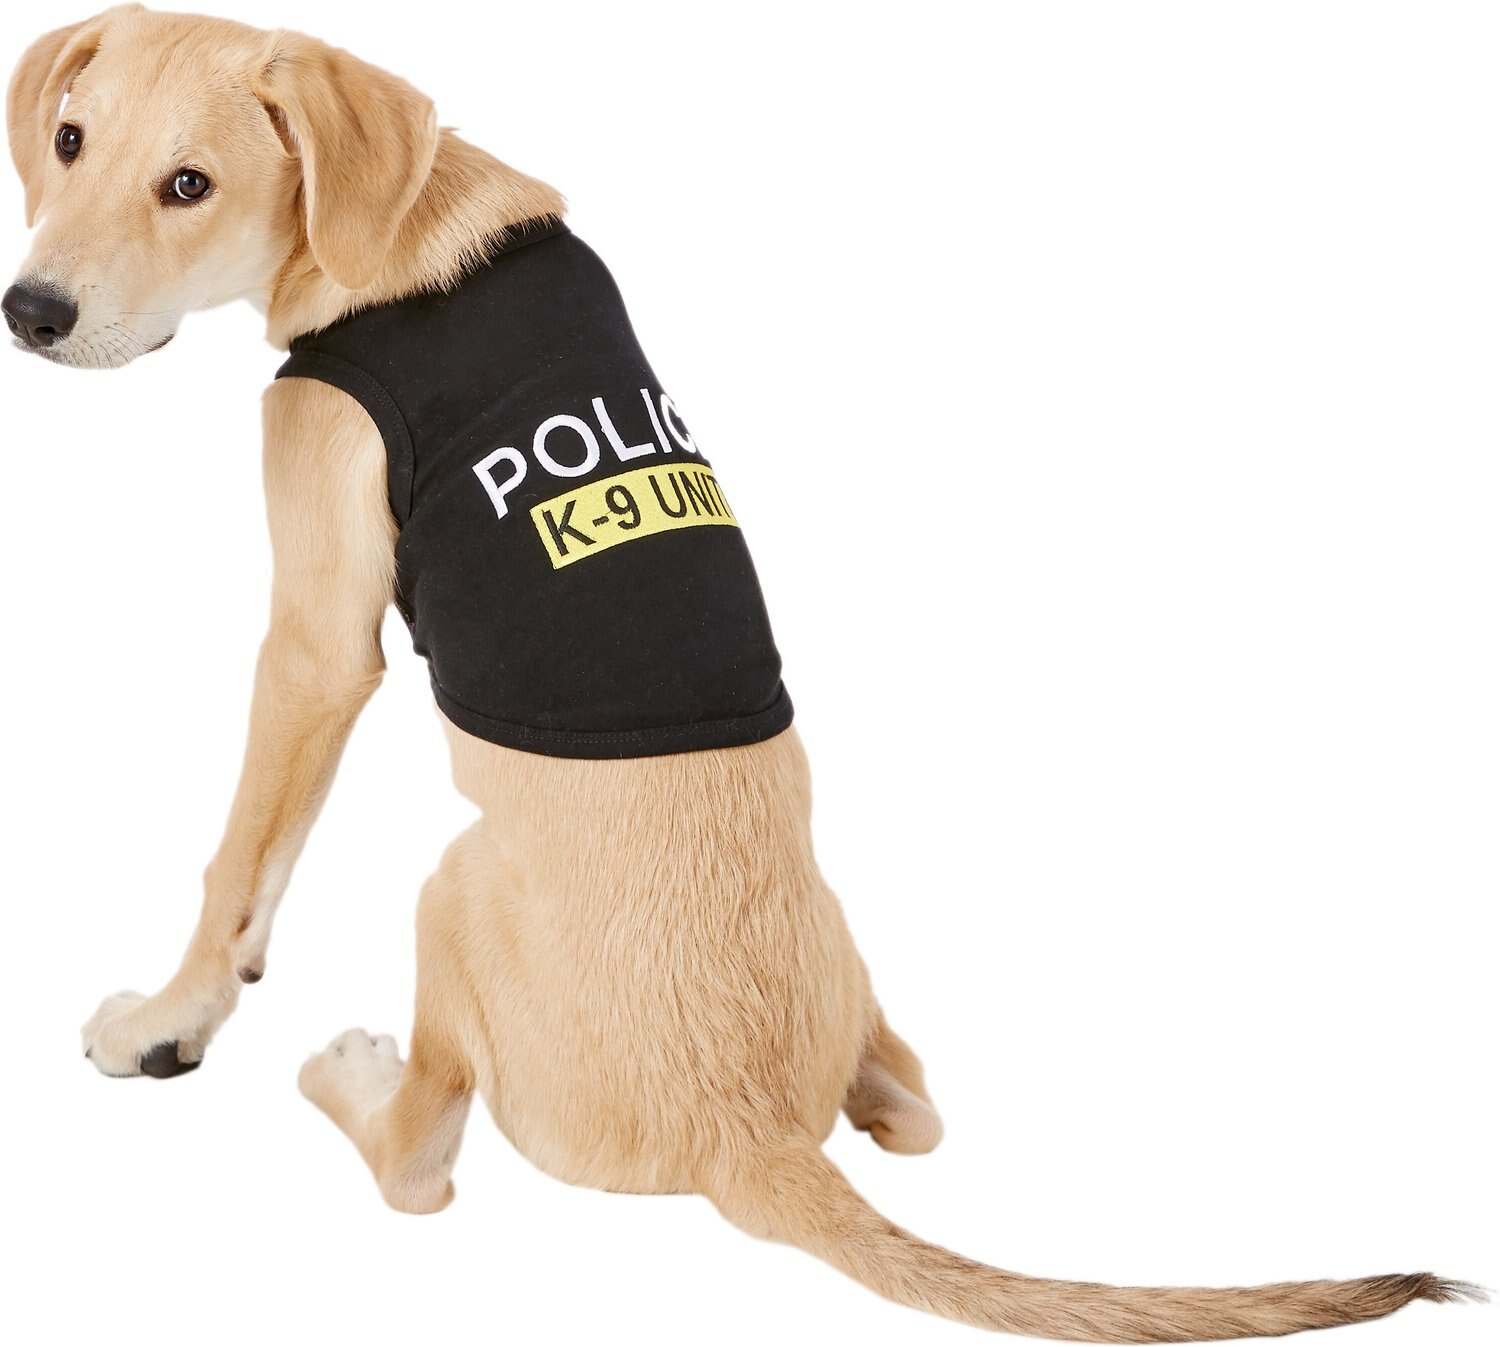 PARISIAN PET Police Dog & Cat T-Shirt, Large - Chewy.com